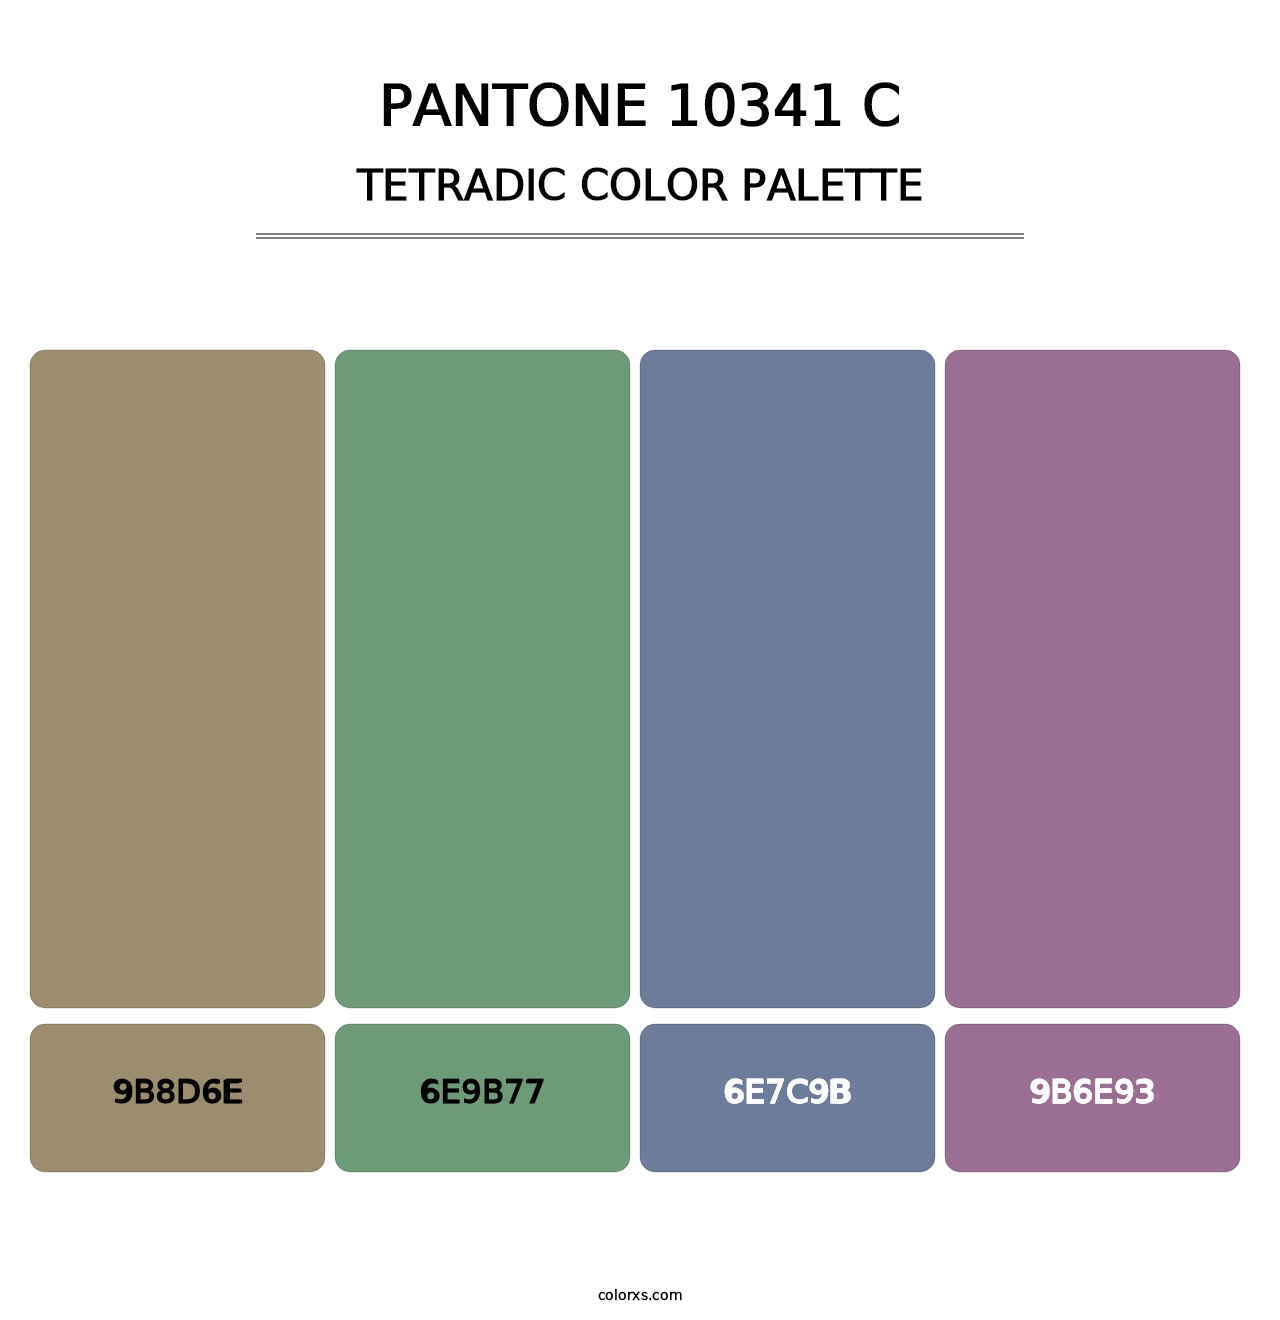 PANTONE 10341 C - Tetradic Color Palette